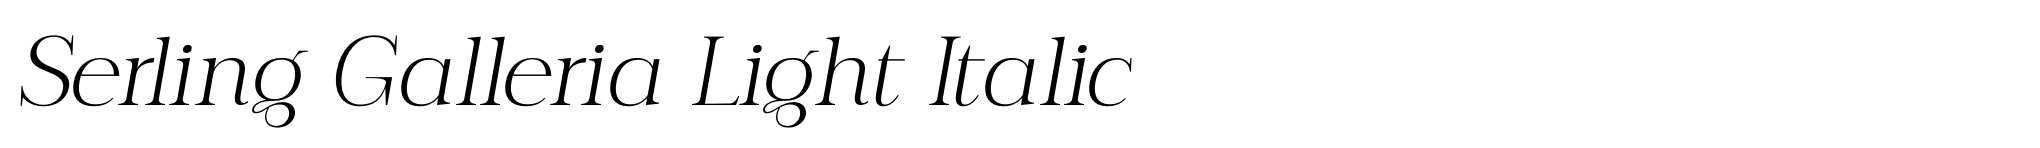 Serling Galleria Light Italic image